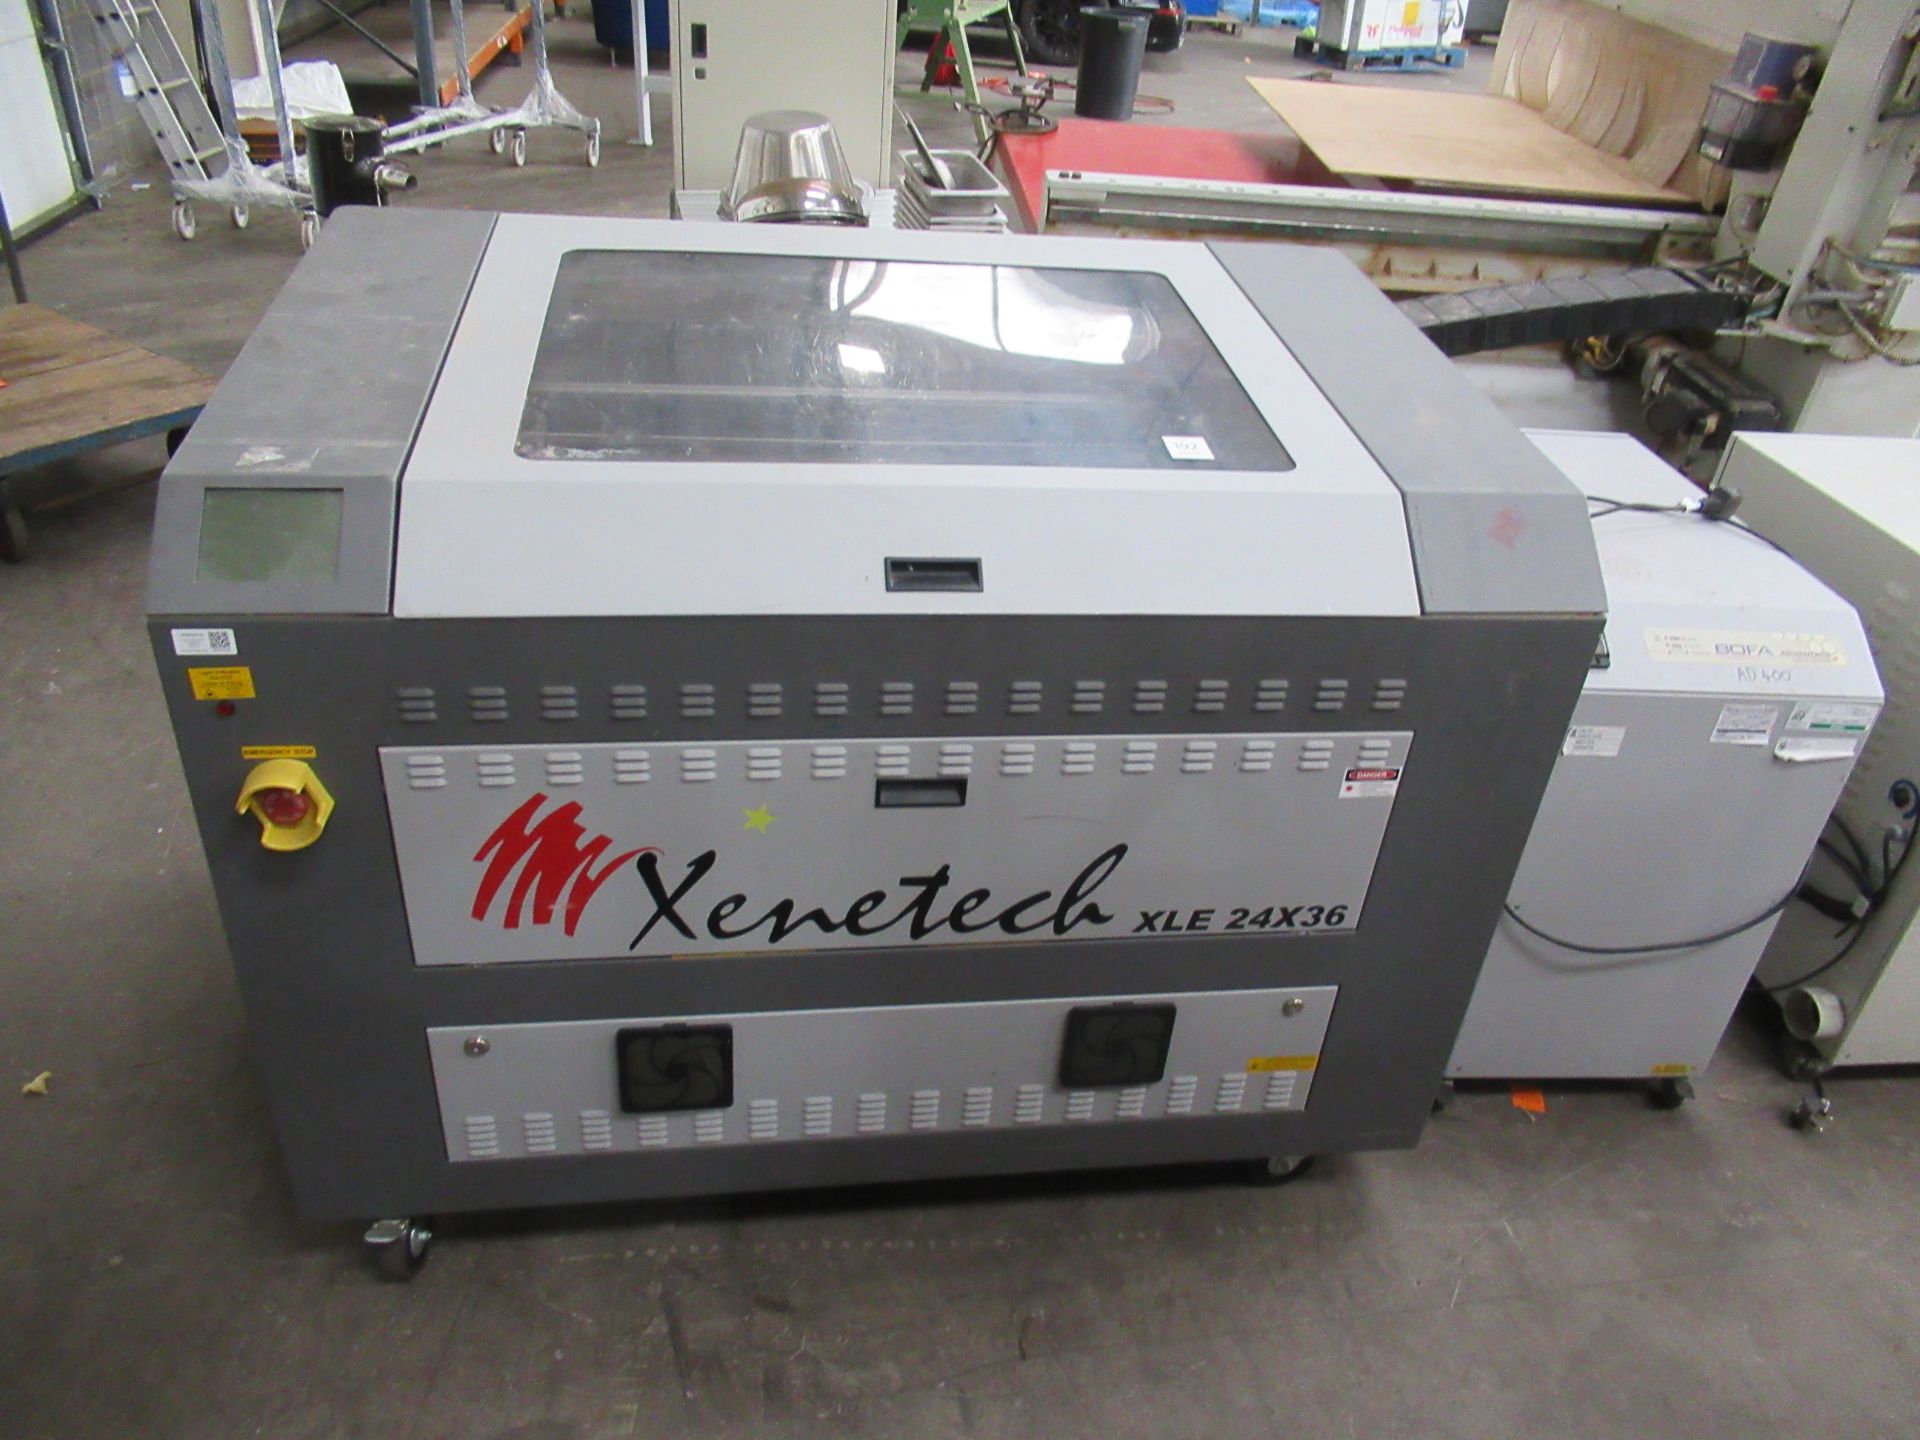 An Xenetech XLE 24 x36 Lazer Engraver come with a Bofa advantage filter unit